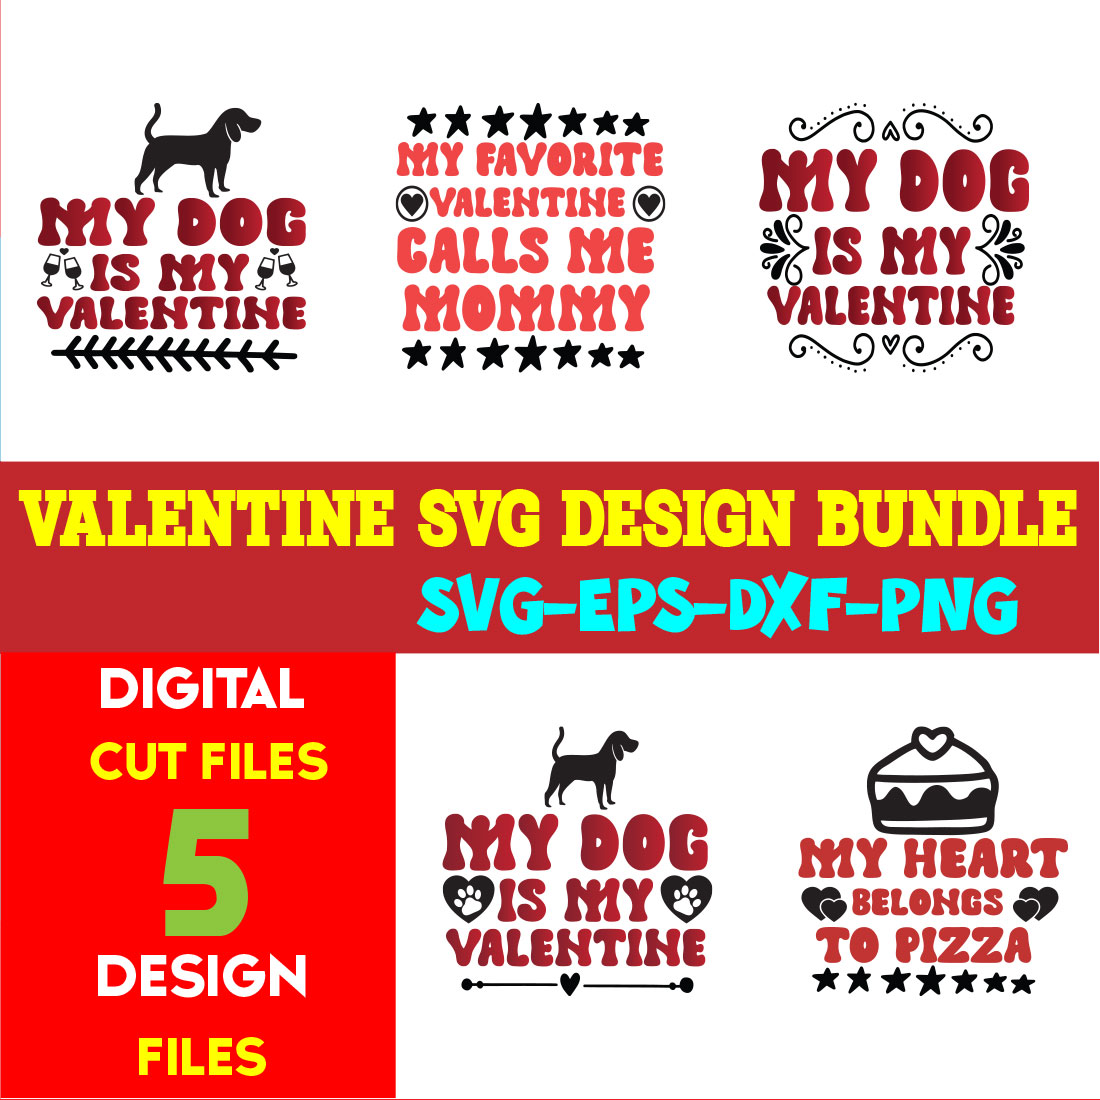 Valentine T-shirt Design Bundle Vol-27 cover image.